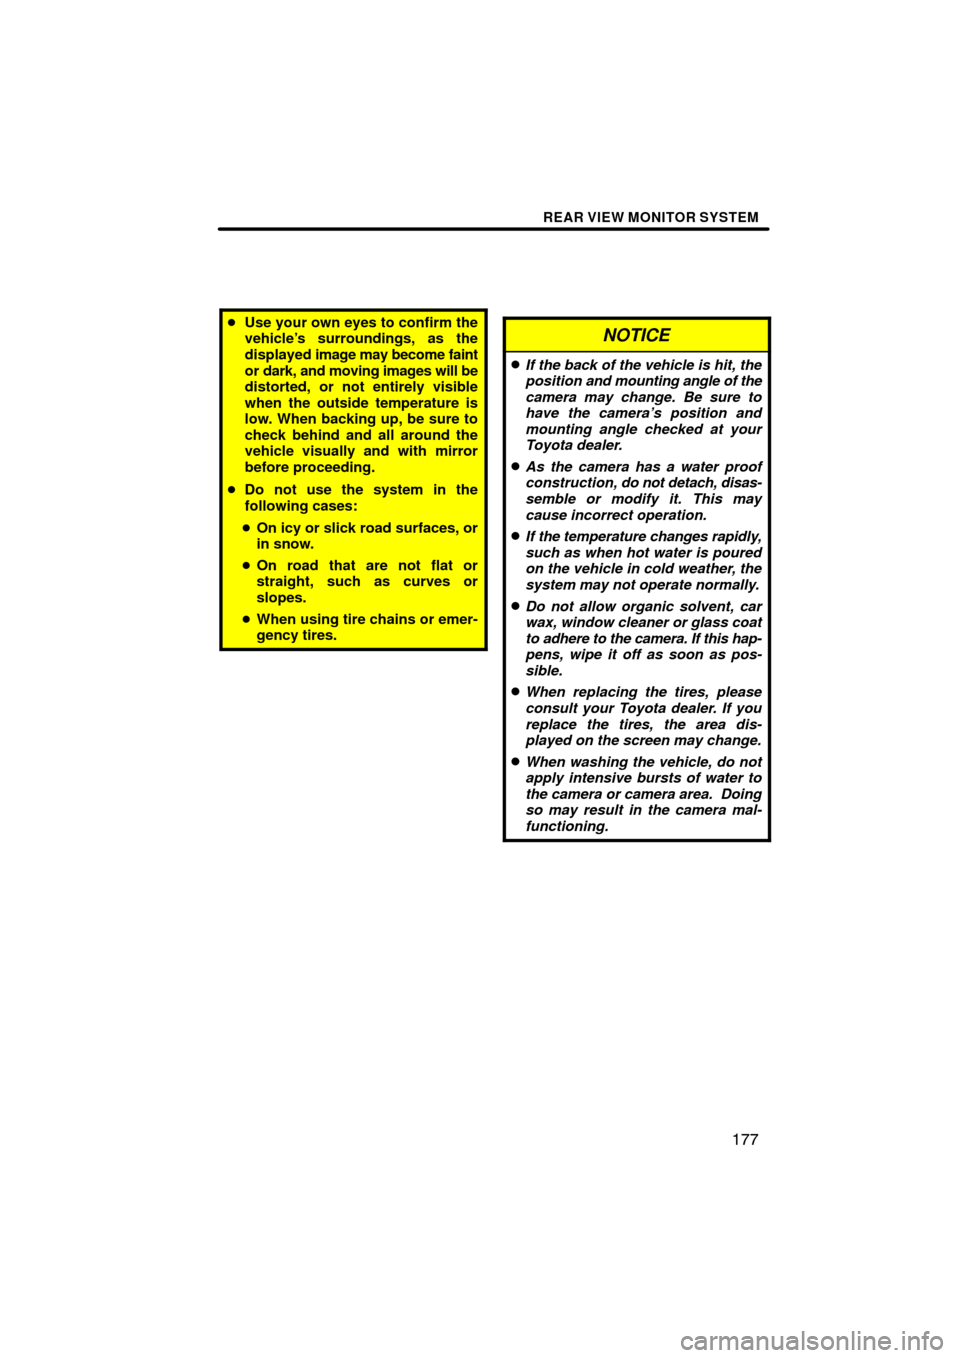 TOYOTA SIENNA 2011 XL30 / 3.G Navigation Manual REAR VIEW MONITOR SYSTEM
177
Use your own eyes to confirm the
vehicle’s surroundings, as the
displayed  image may become faint
or dark, and moving images will be
distorted, or not entirely visible
